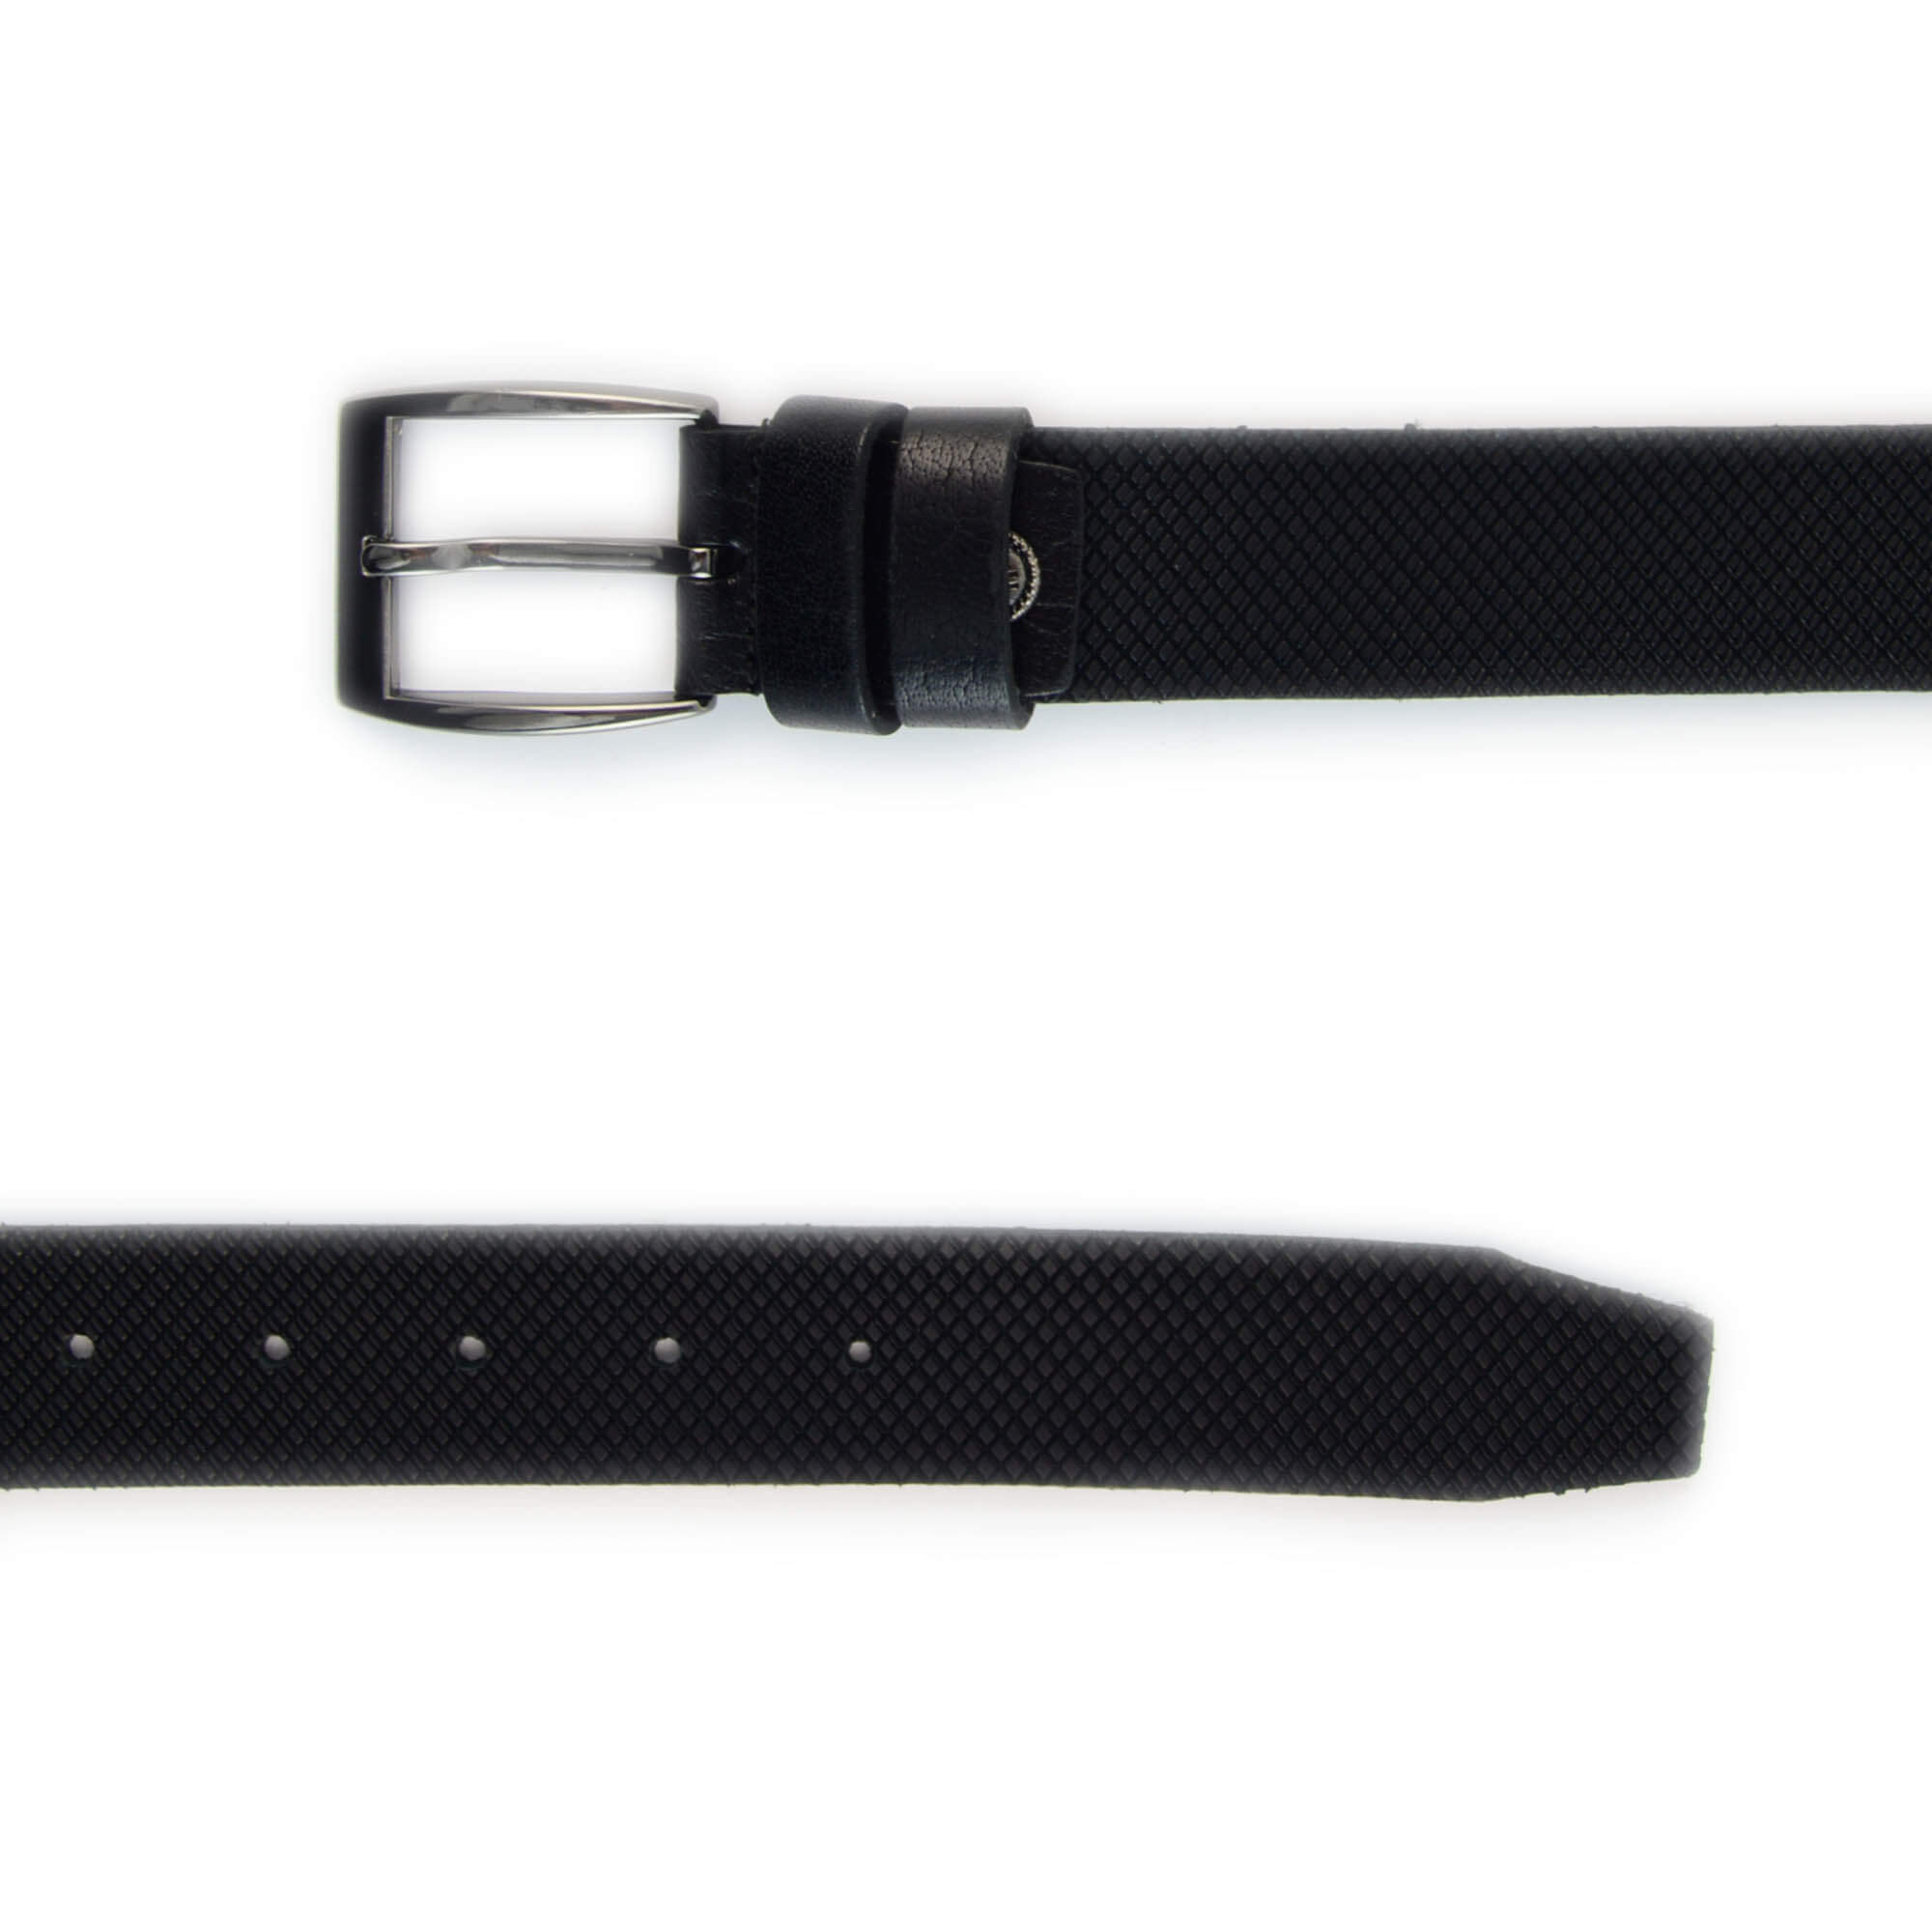 Buy Belt For Black Suit - Unique Laser Leather - LeatherBeltsOnline